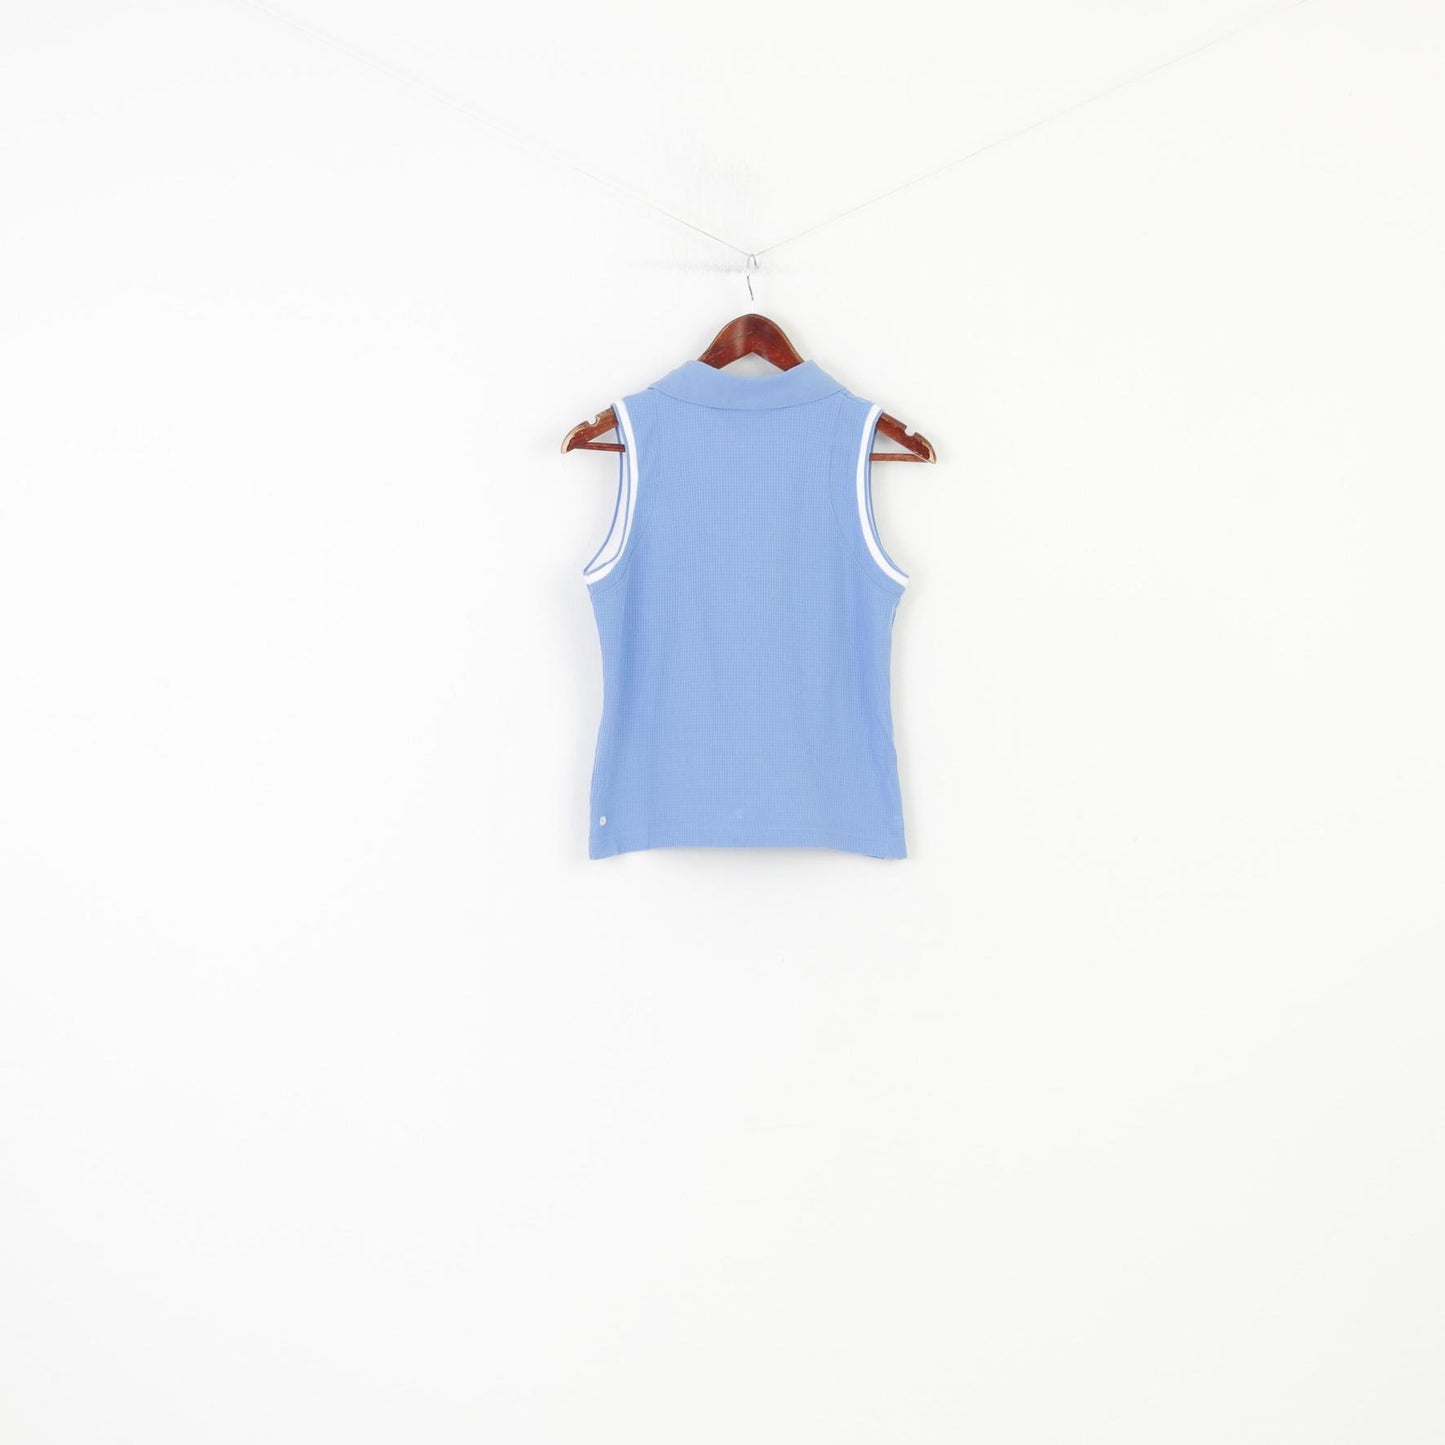 Ellesse Women 10 S Shirt Sleeveless Blue Cotton Sportswear Zip Neck Vest Vintage Top